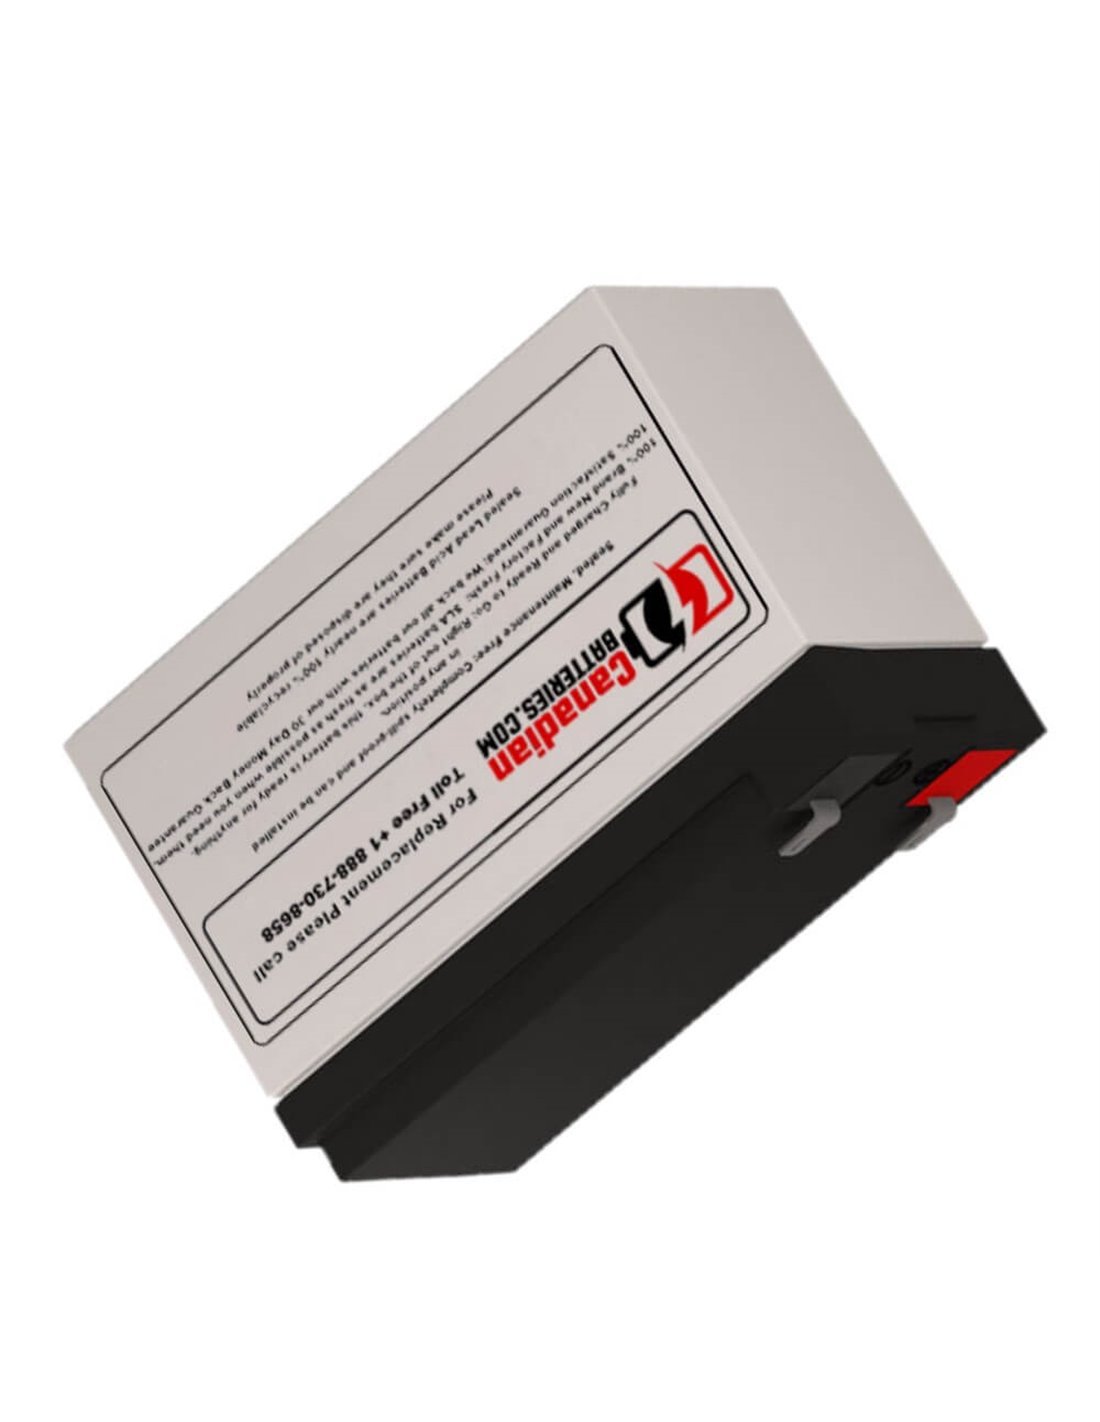 Apc Rbc110 Replacement Battery Cartridge 12v 9ah Backup Battery